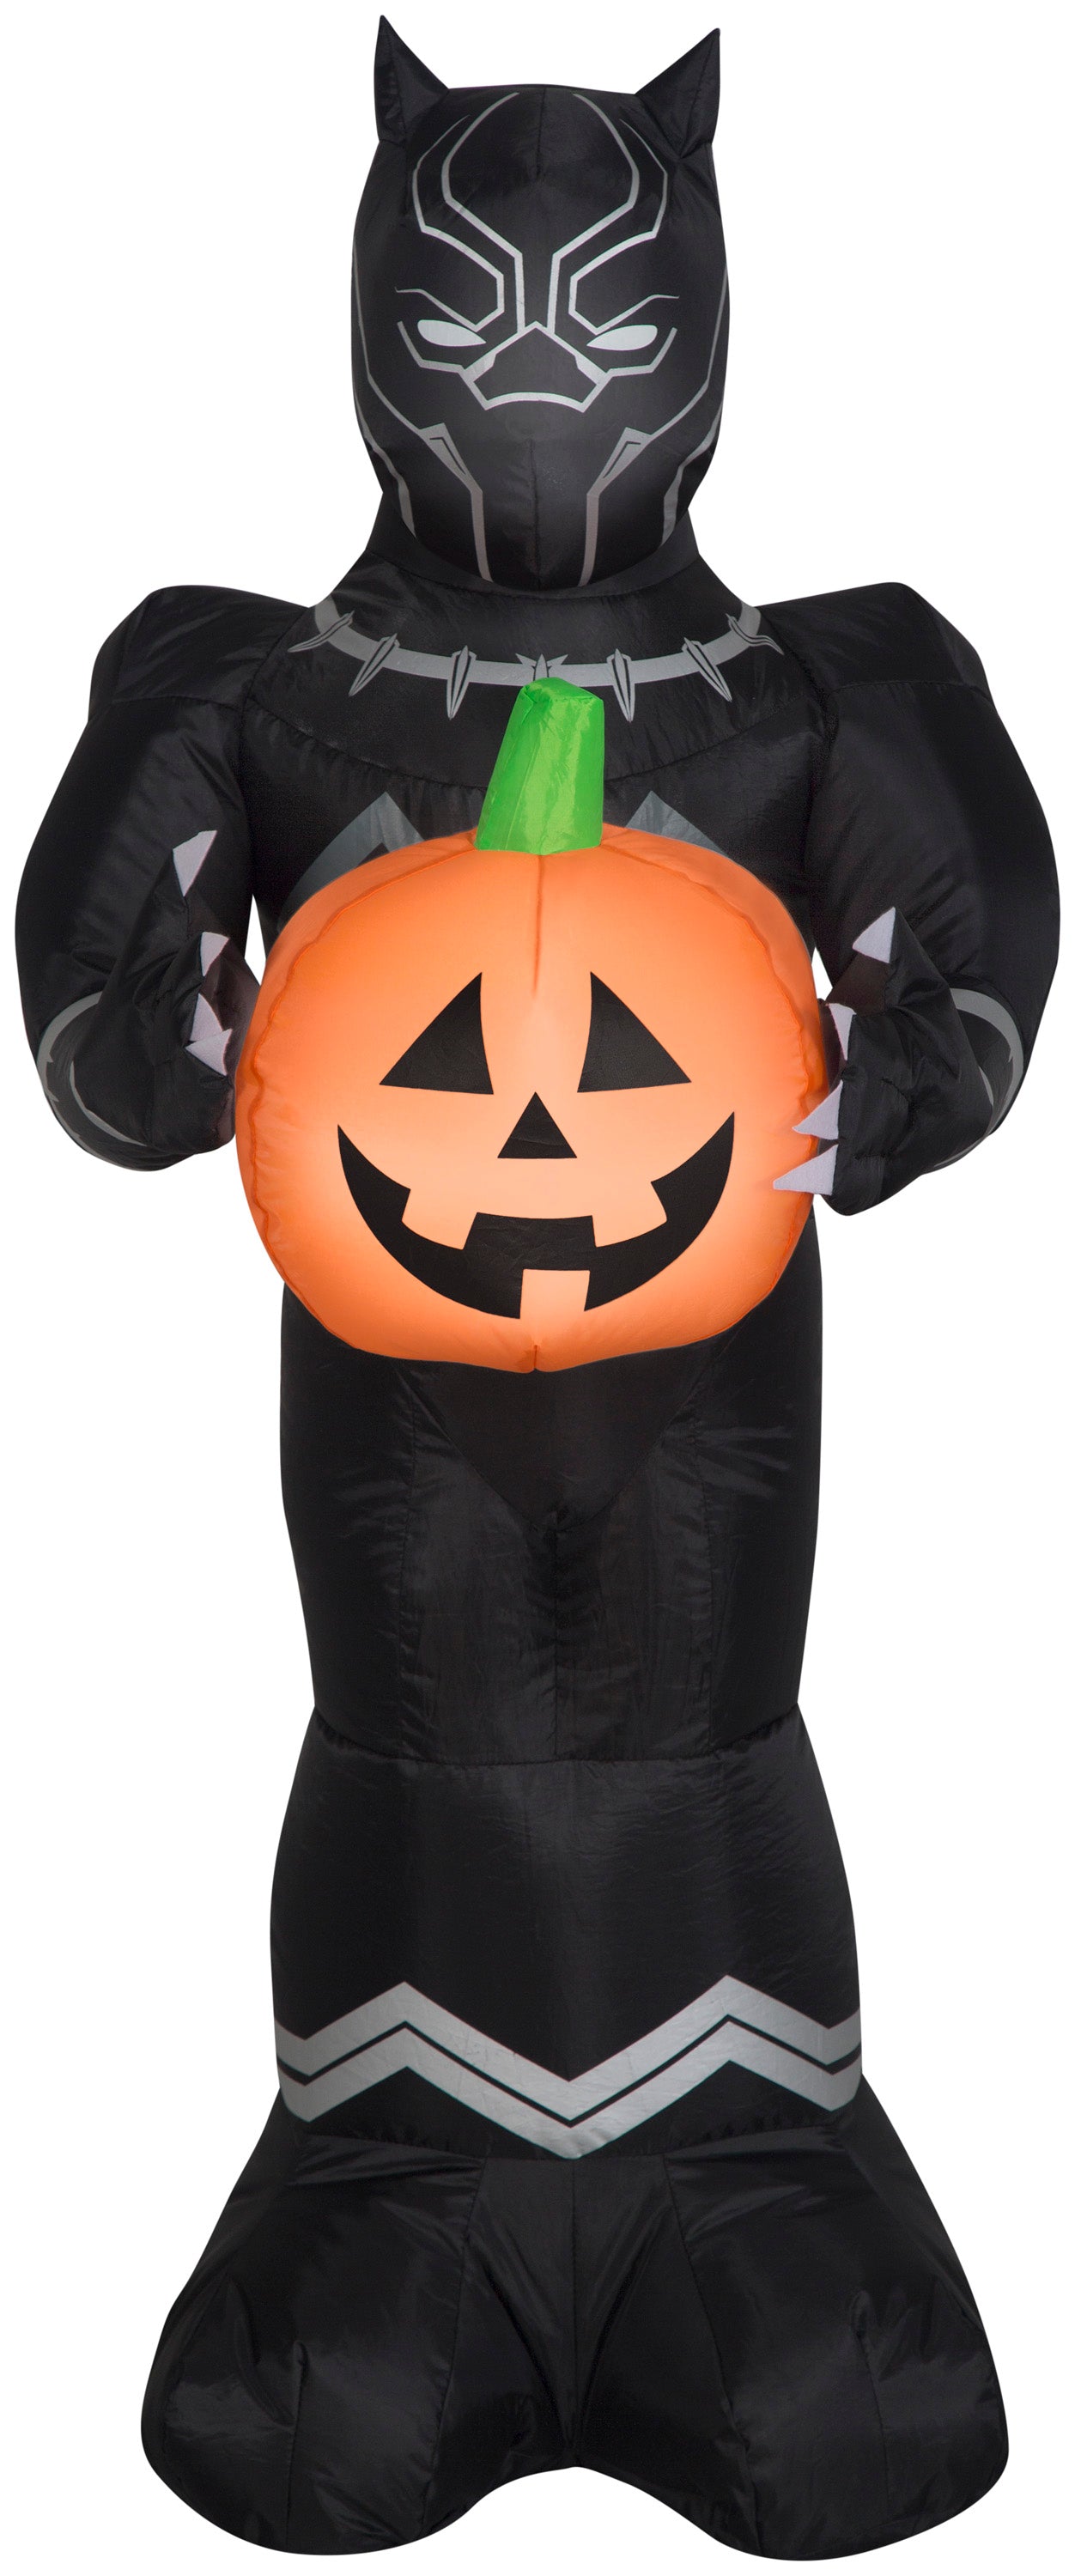 3.5' Airblown Black Panther w/ Pumpkin Halloween Inflatable